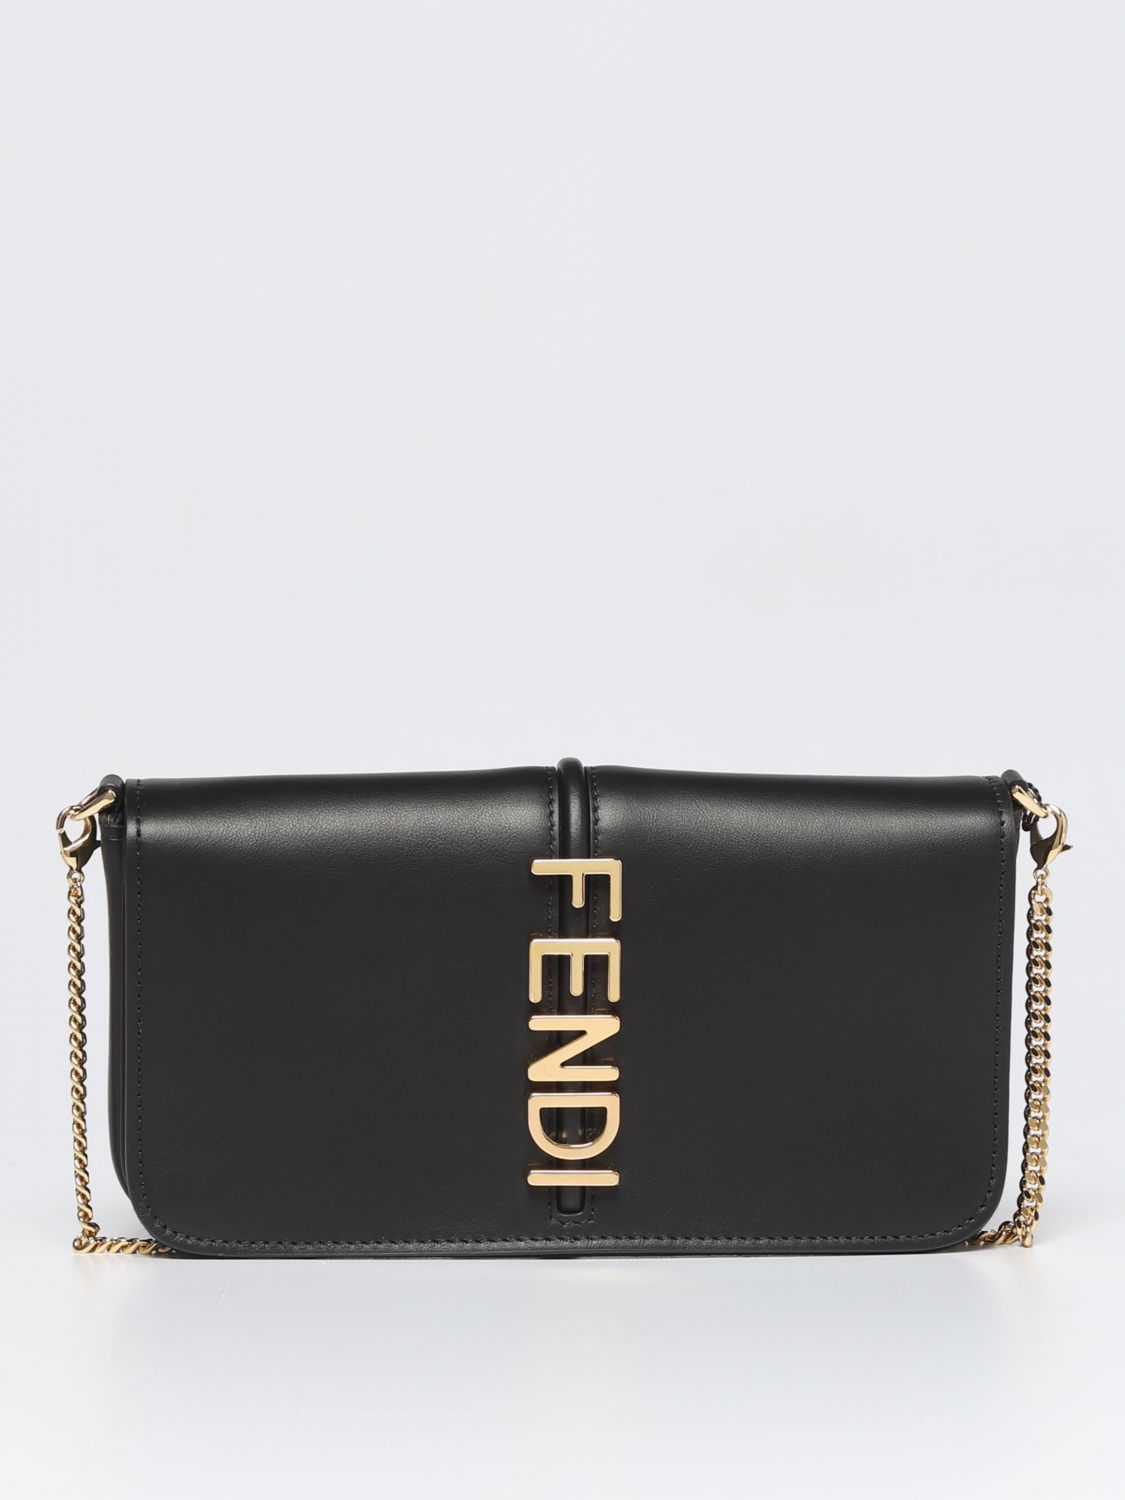 Alle Rejsebureau bøf FENDI: Fendigraphy wallet bag in leather with applied lettering - Black |  Fendi mini bag 8BS076A5DY online on GIGLIO.COM